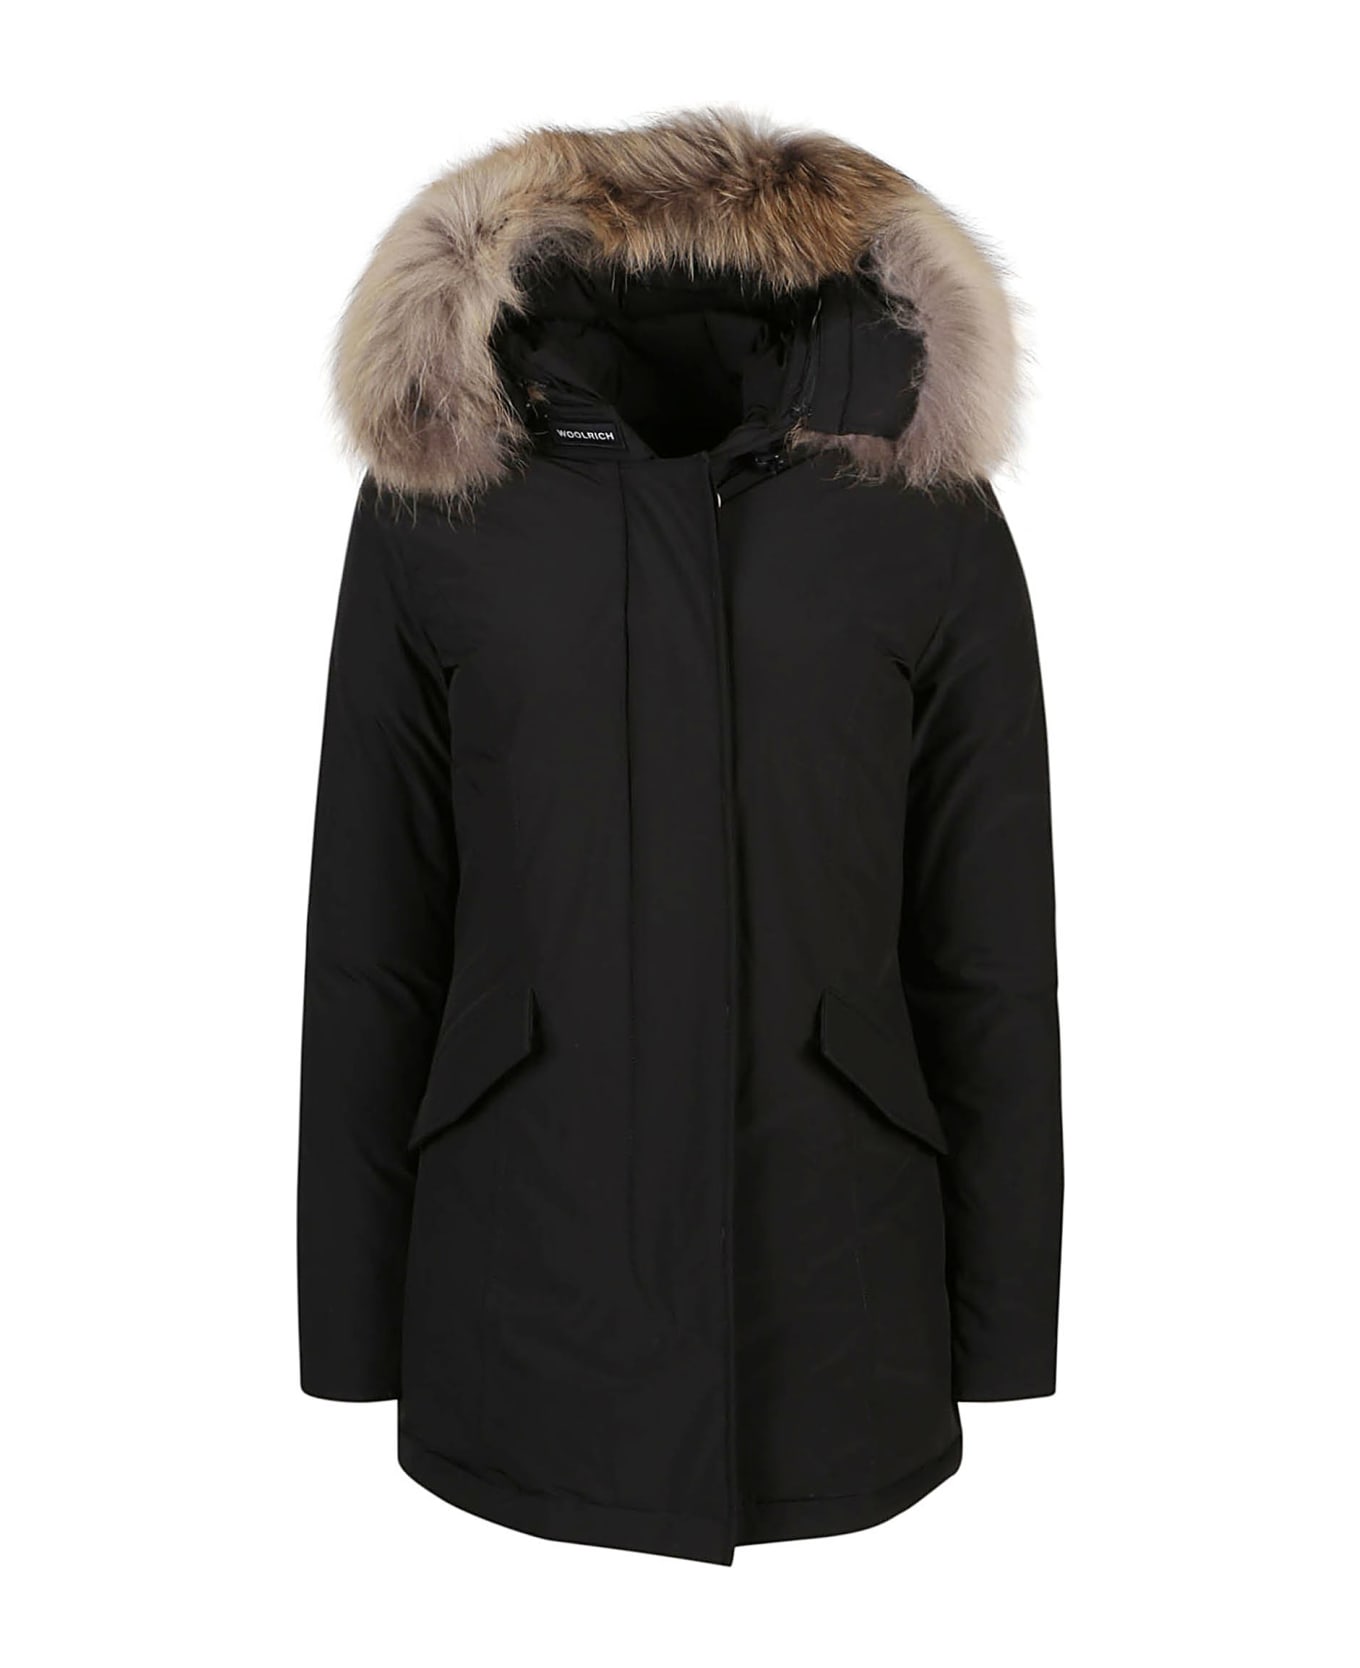 Woolrich Luxury Arctic Raccoon Parka - Black